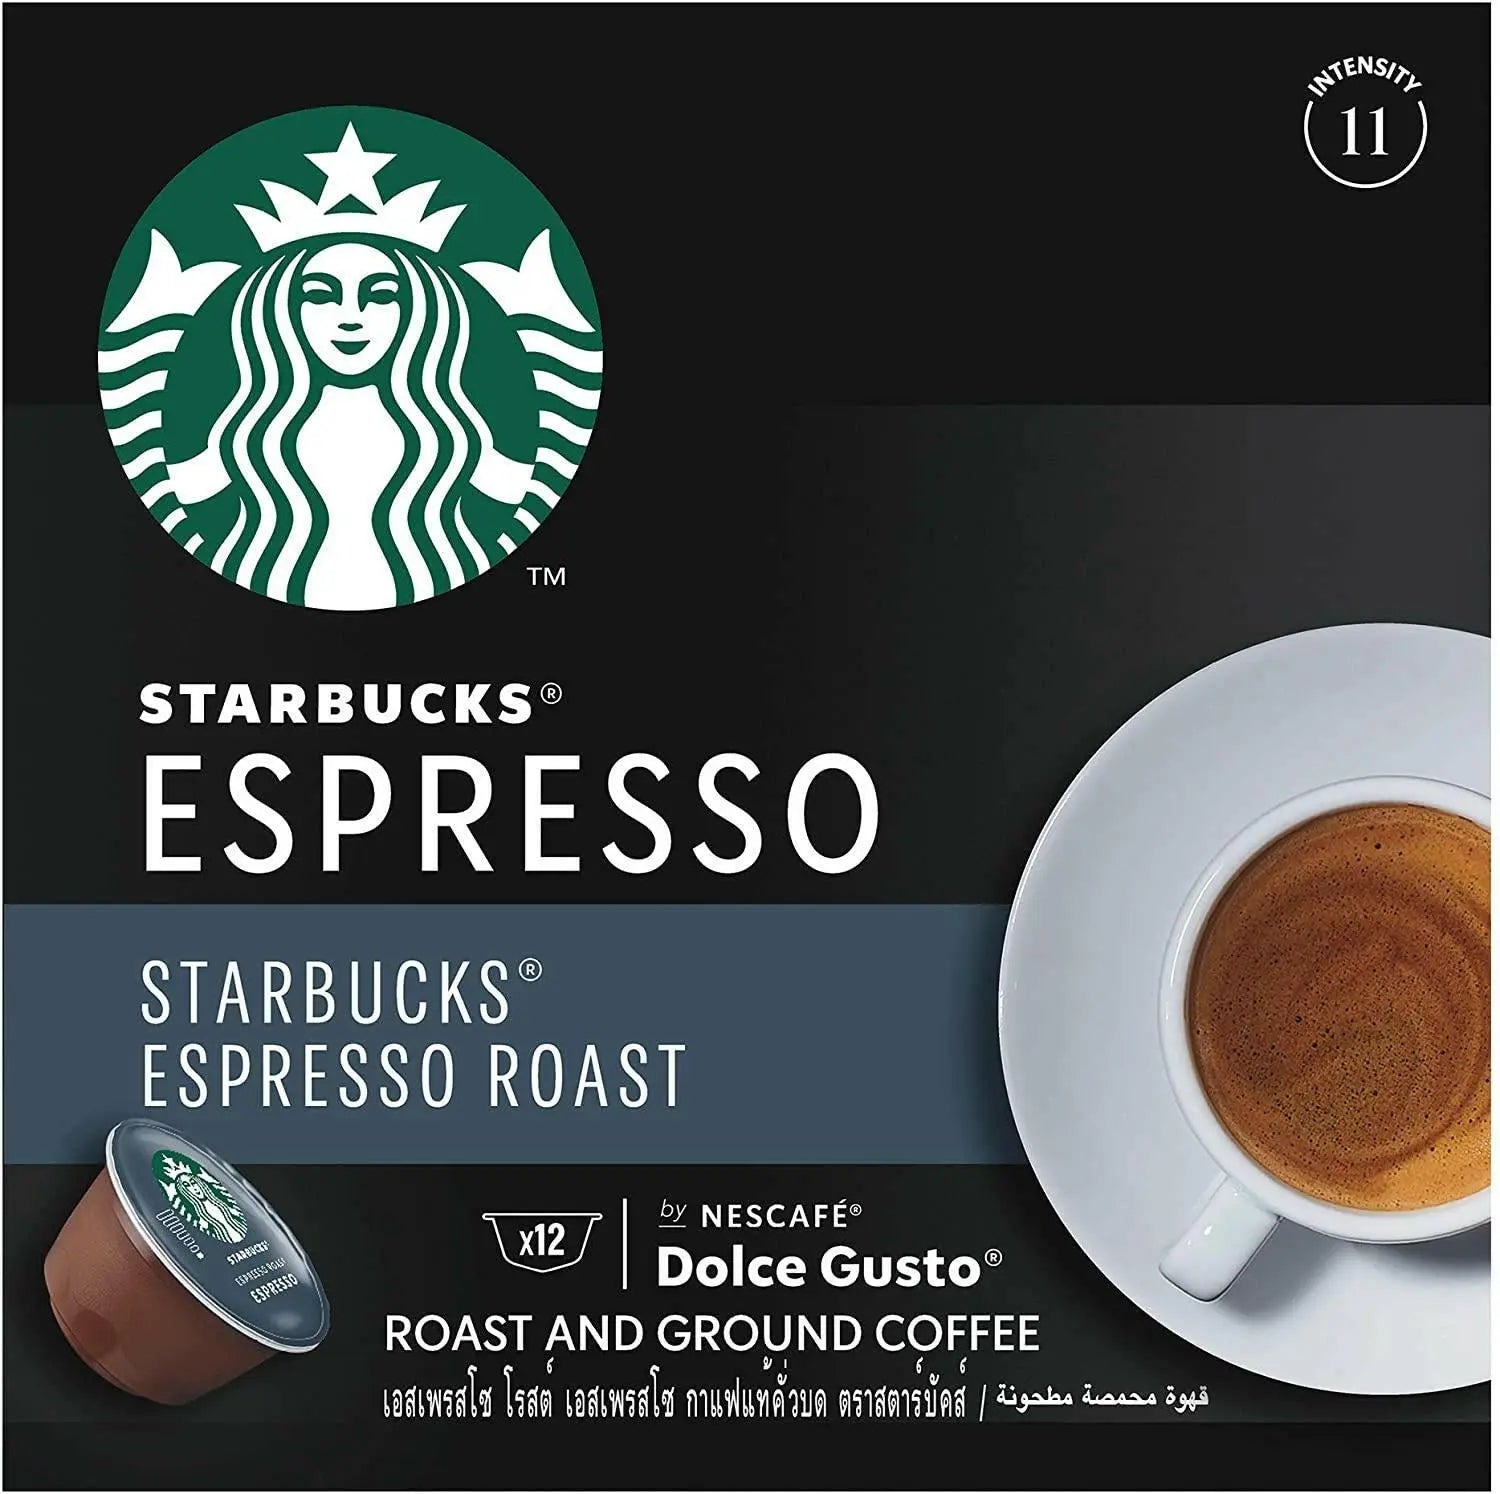 Starbucks Dolce Gusto Dark Espresso Roast 12 Capsules